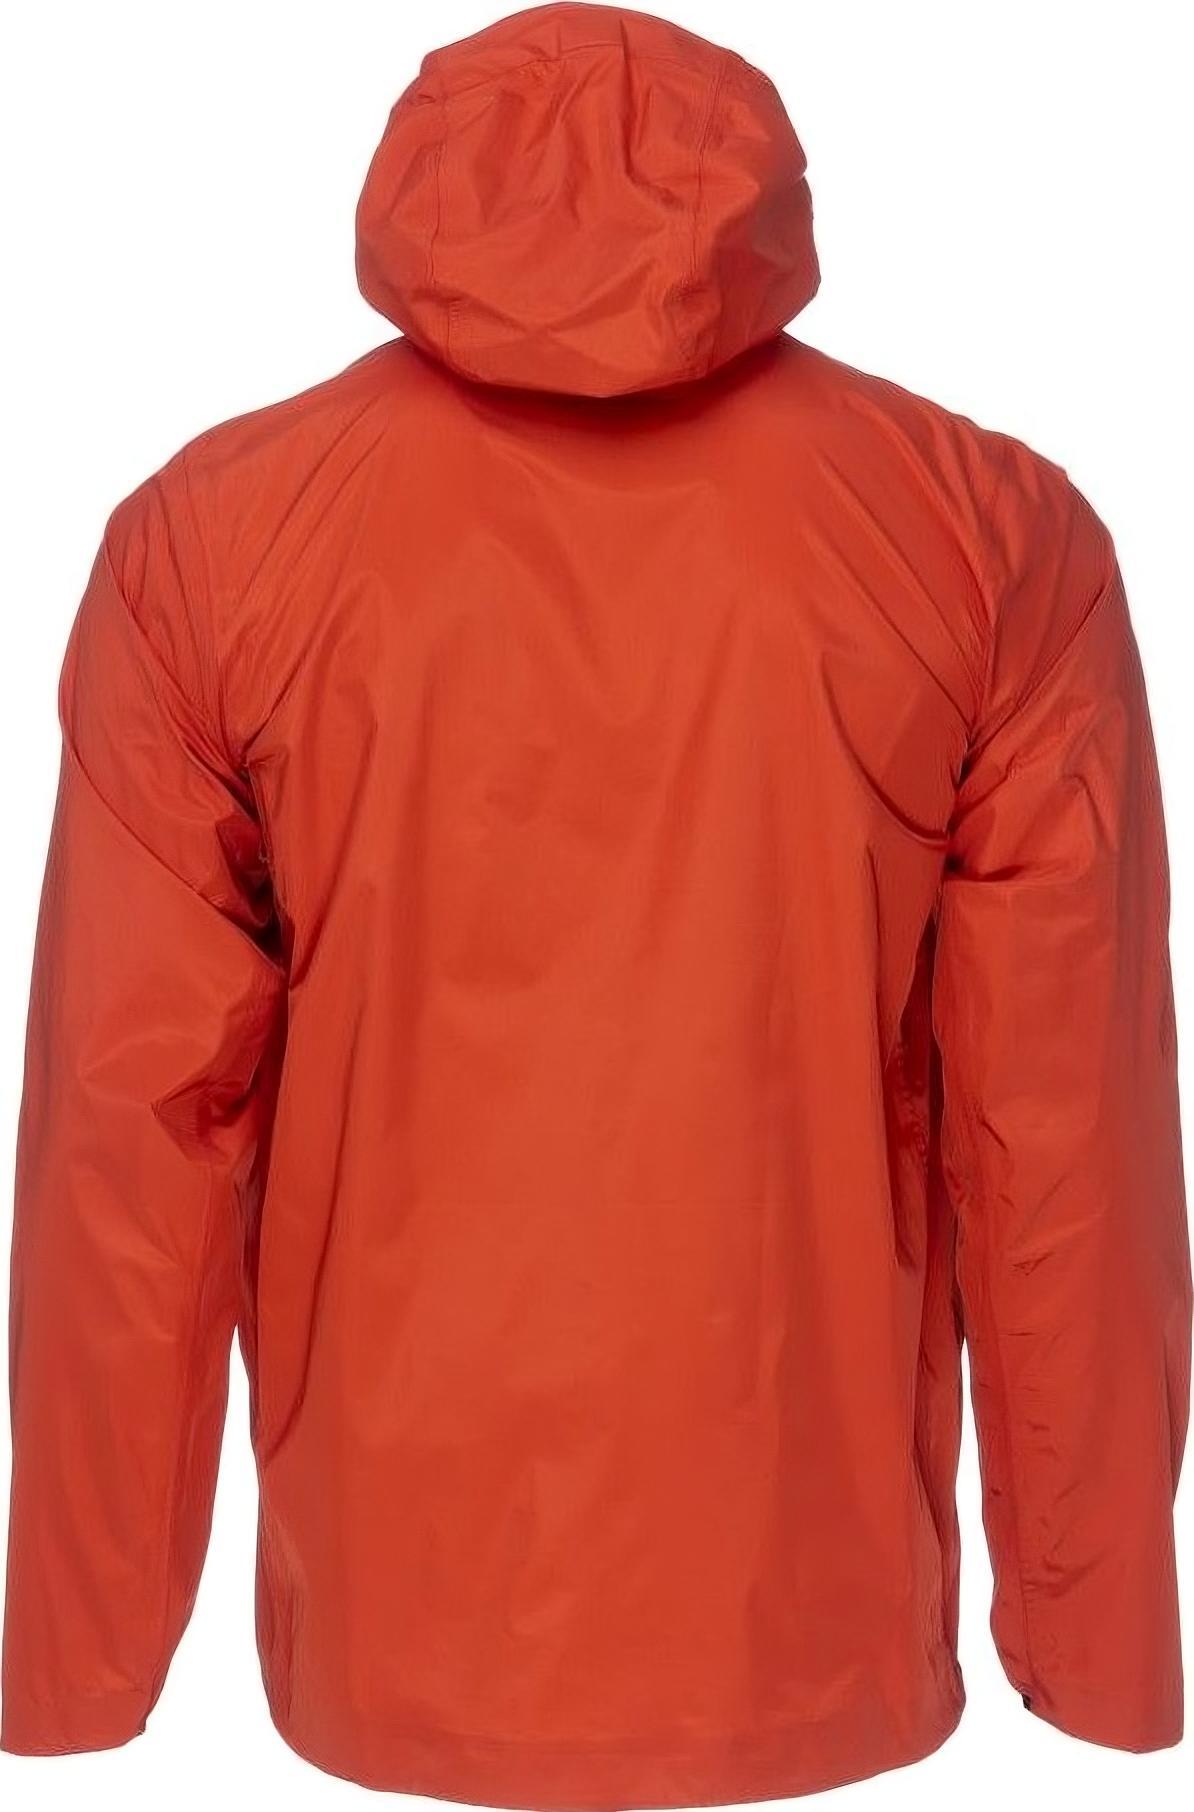 Куртка мужская Turbat Isla Mns orange red XXXL красный фото 3